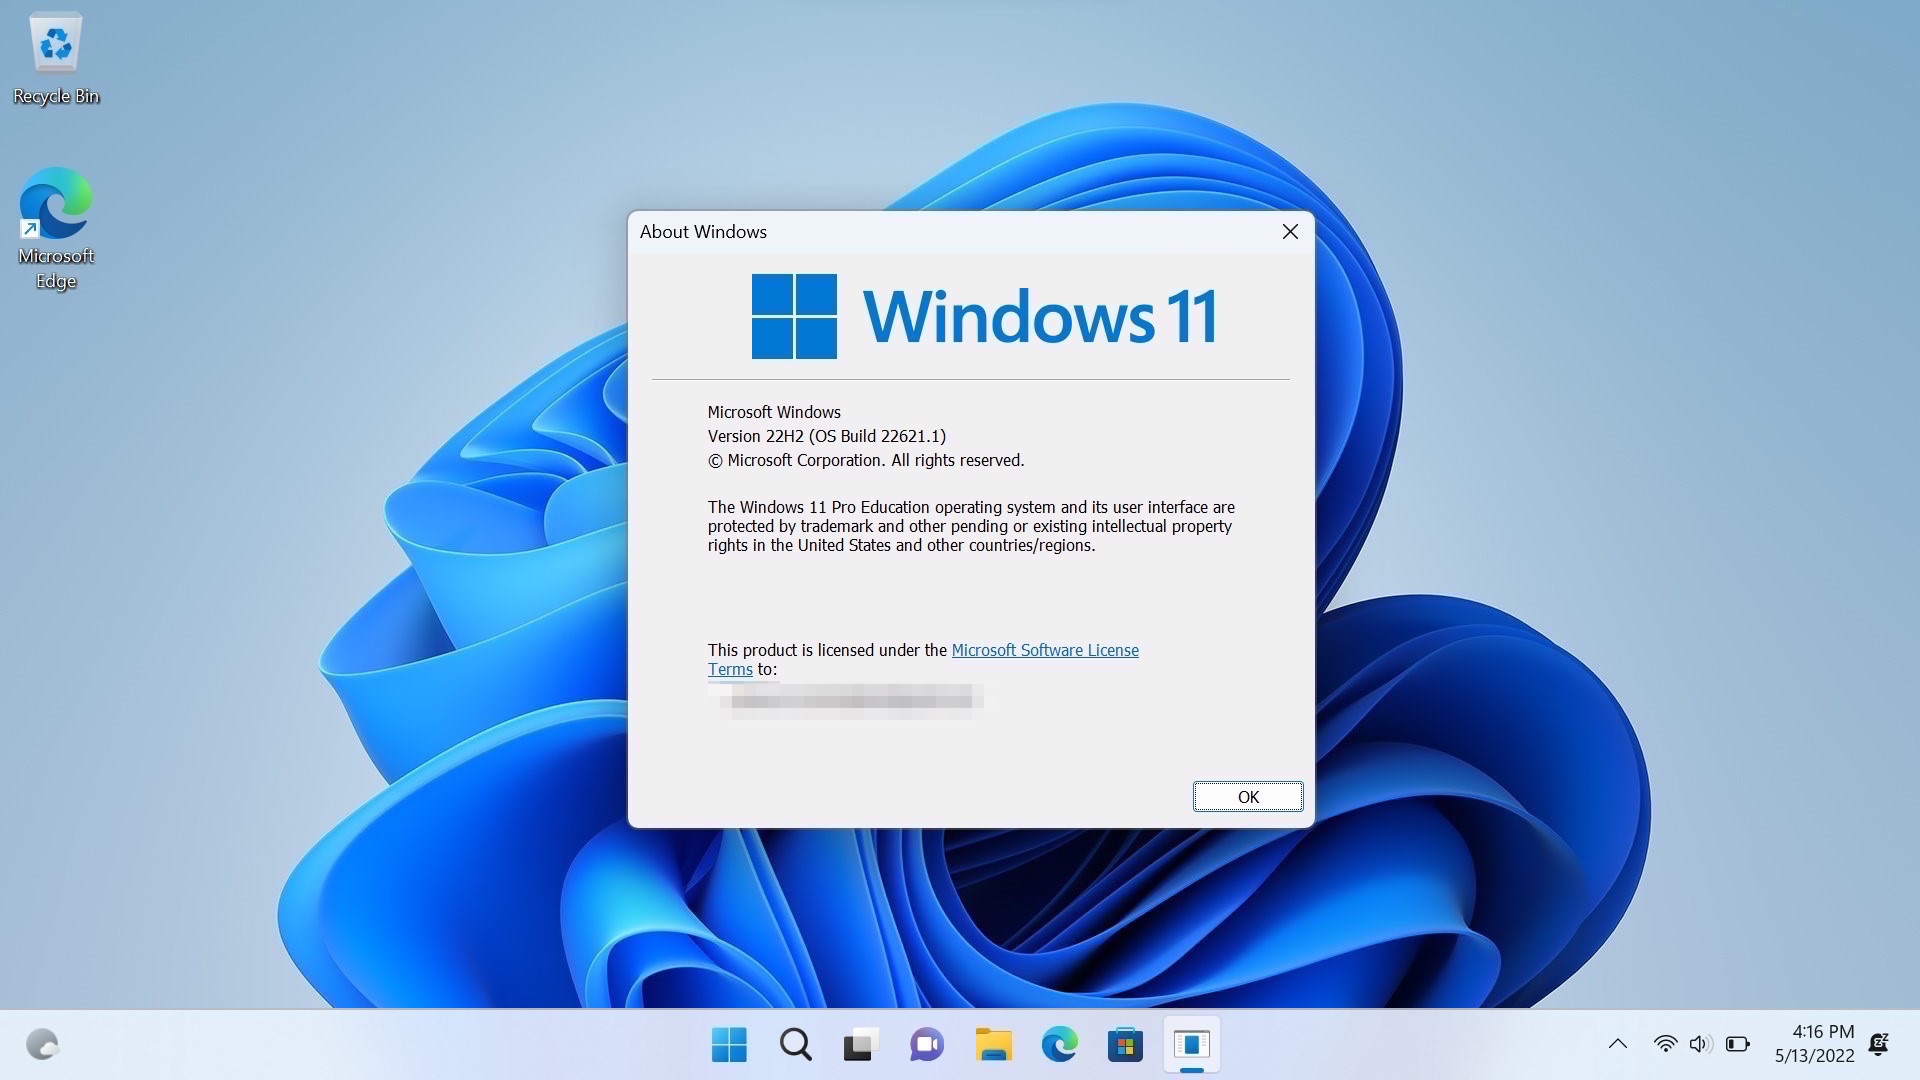 Windows 11 SE Overview - Windows Education